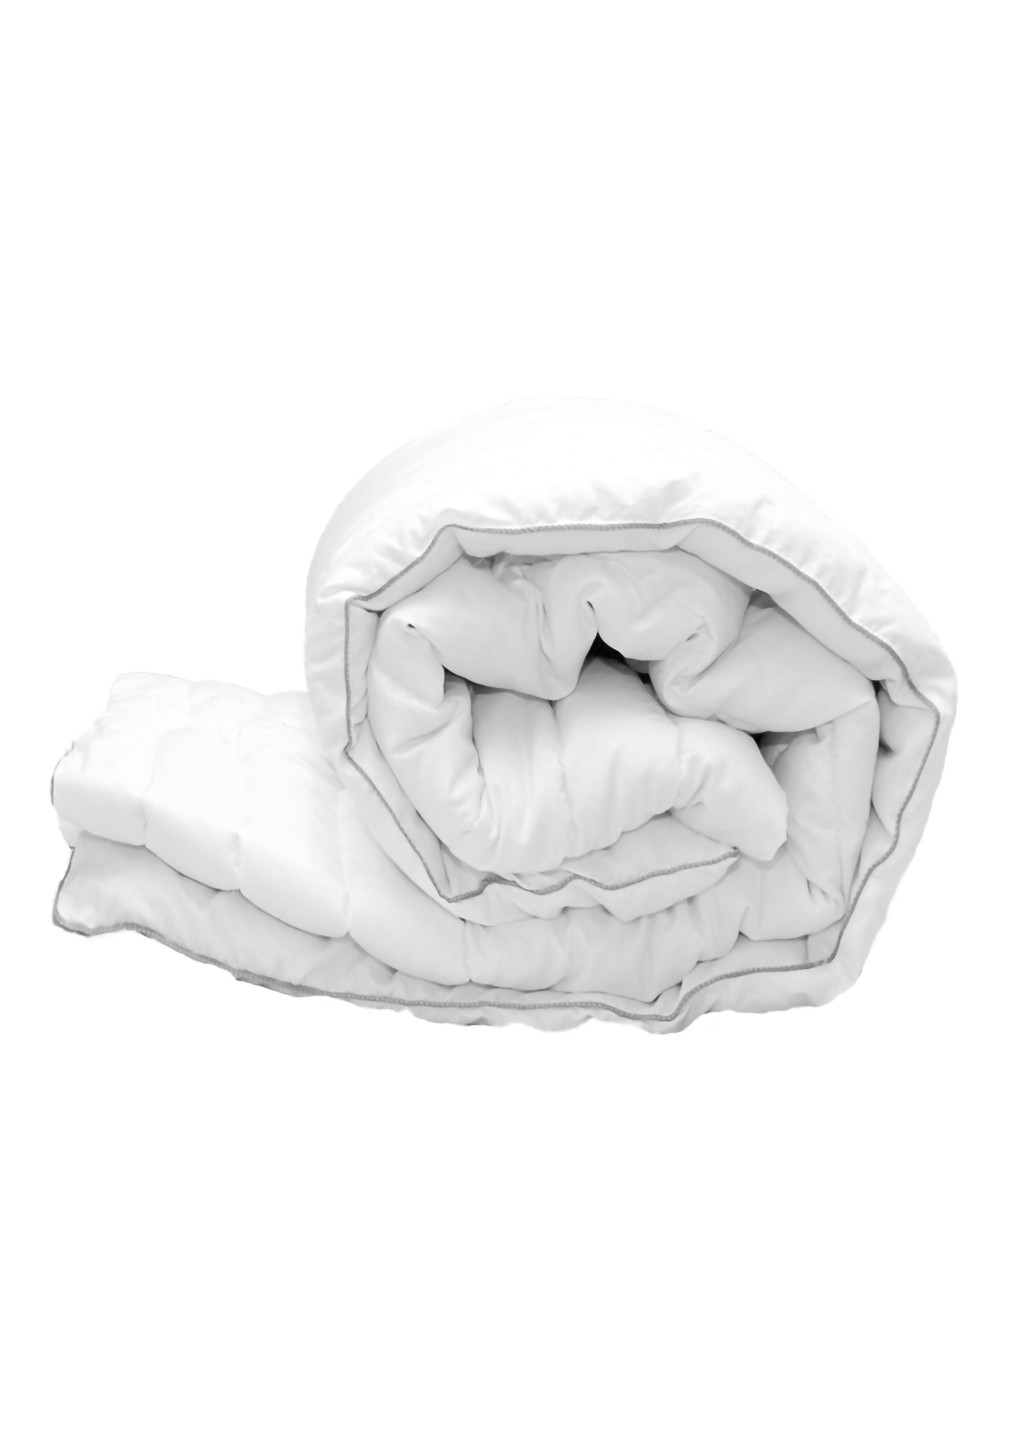 Одеяло лебяжий пух White 1.5-сп. Tag (254805553)